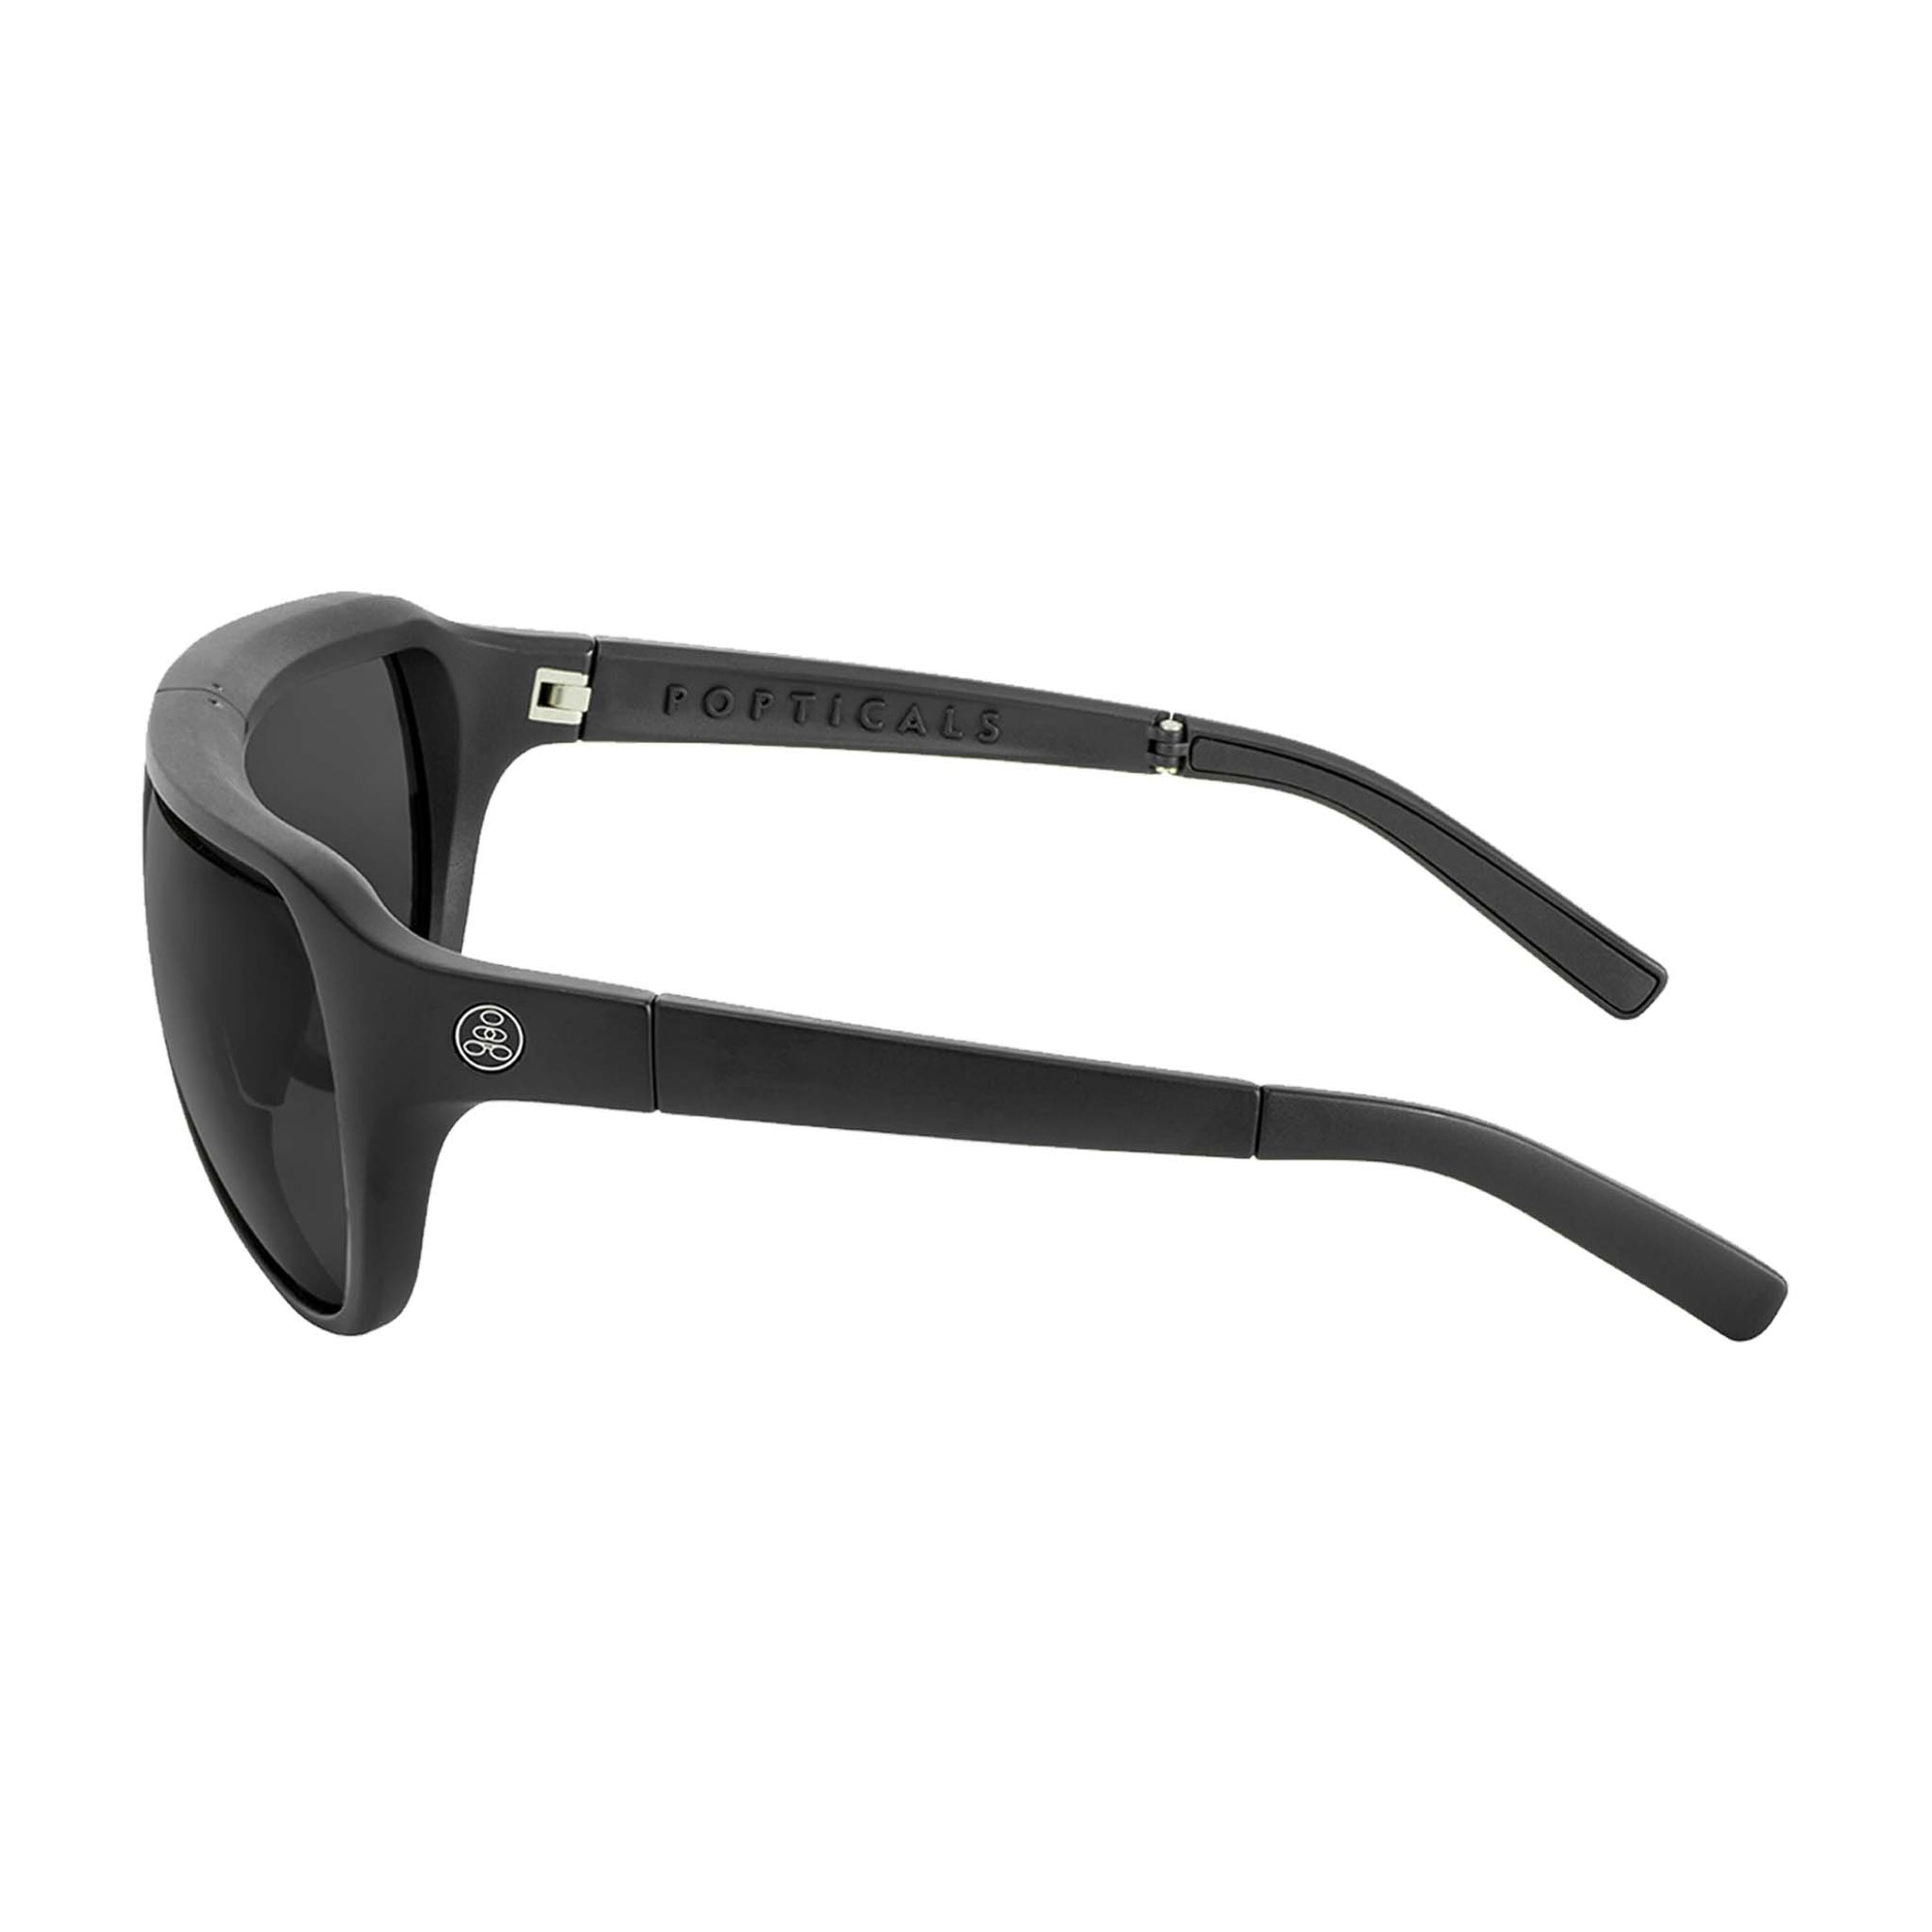 Popticals, Premium Compact Sunglasses, PopAir, 300010-BMGP, Polarized Sunglasses, Matte Black Frame, Gray Lenses, Side View